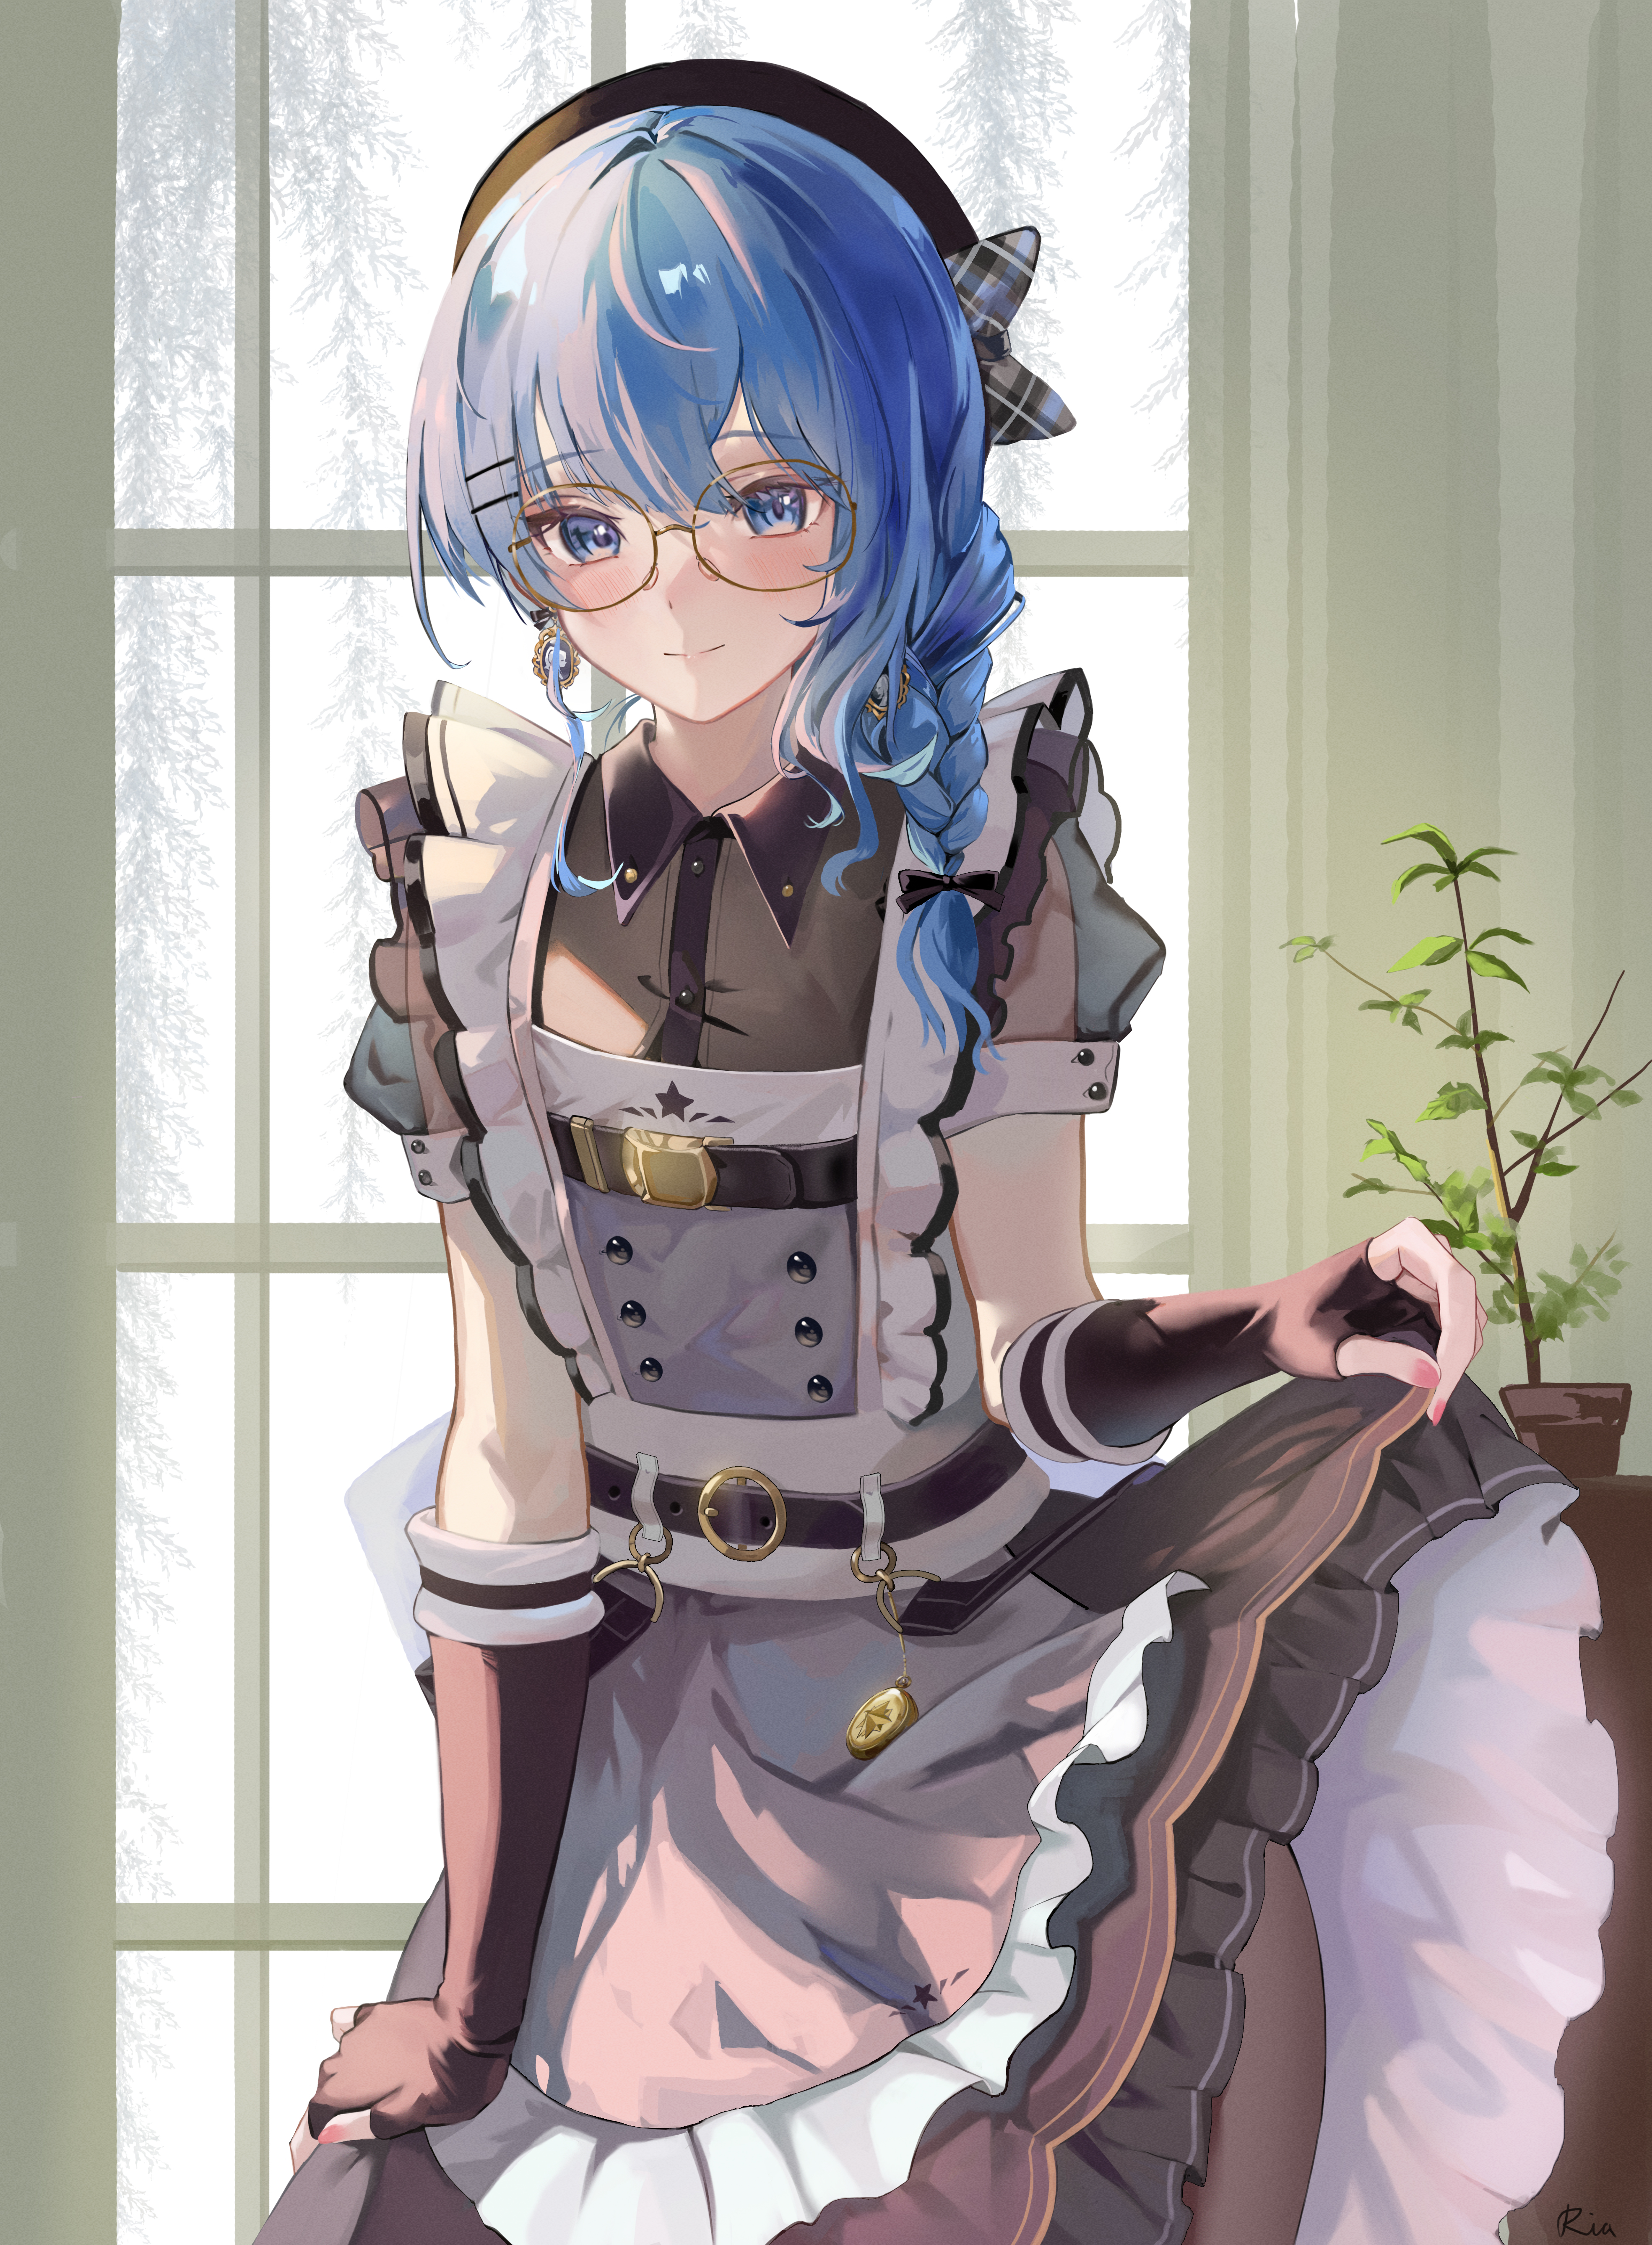 Anime 3939x5353 maid anime girls maid outfit lifting dress blue hair blue eyes glasses braids smiling portrait display